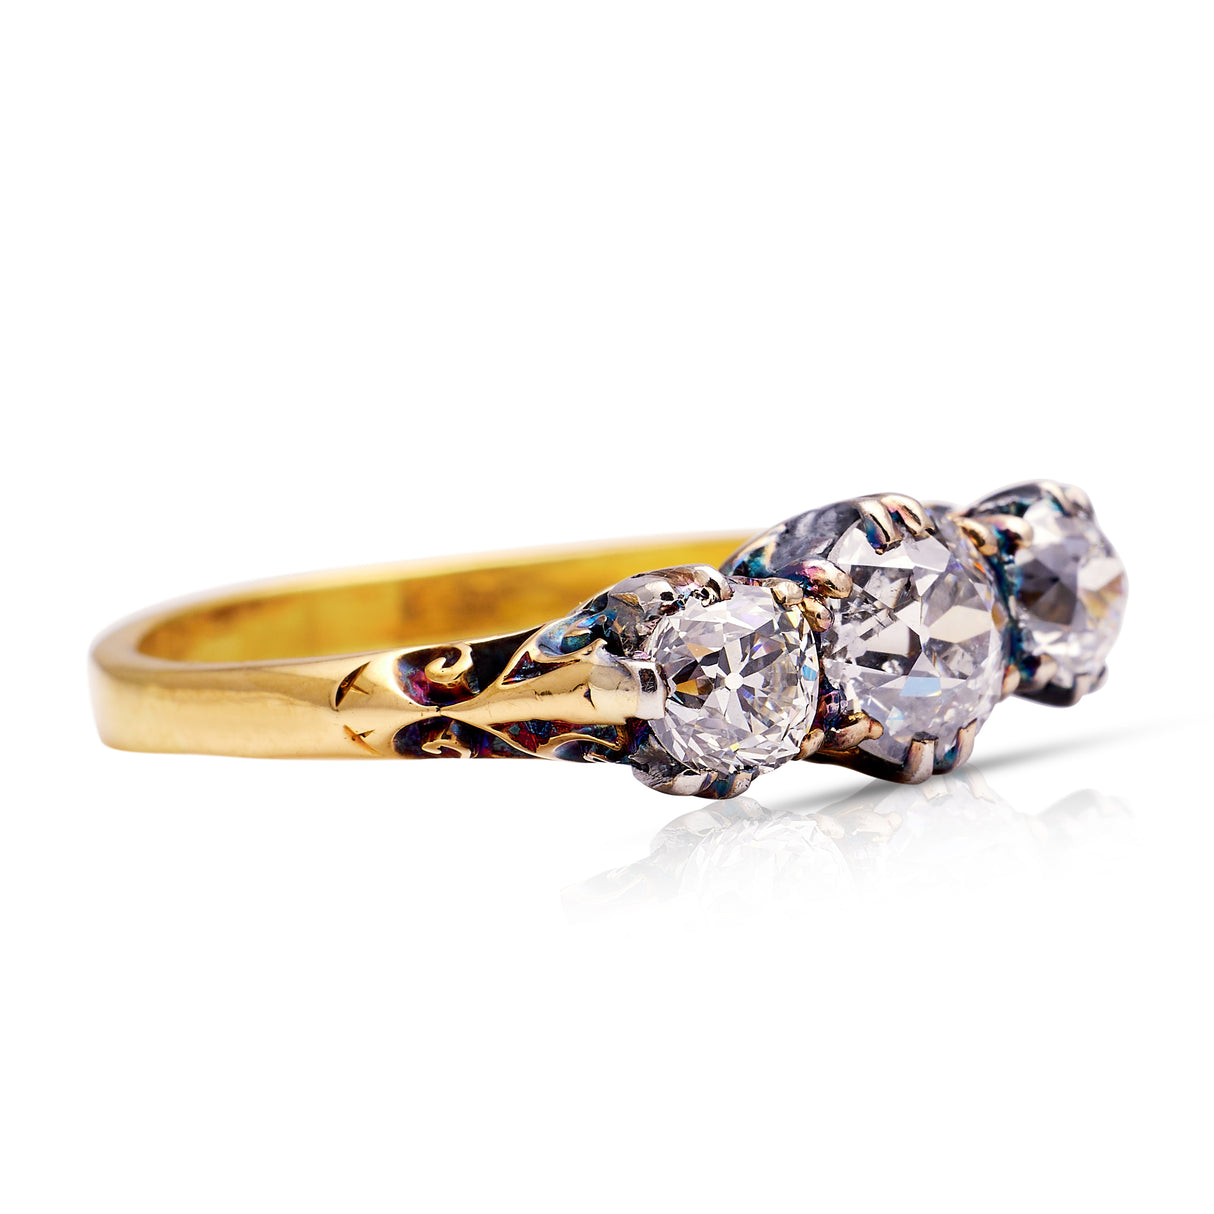 Antique Edwardian three-stone diamond engagement ring, side view. 